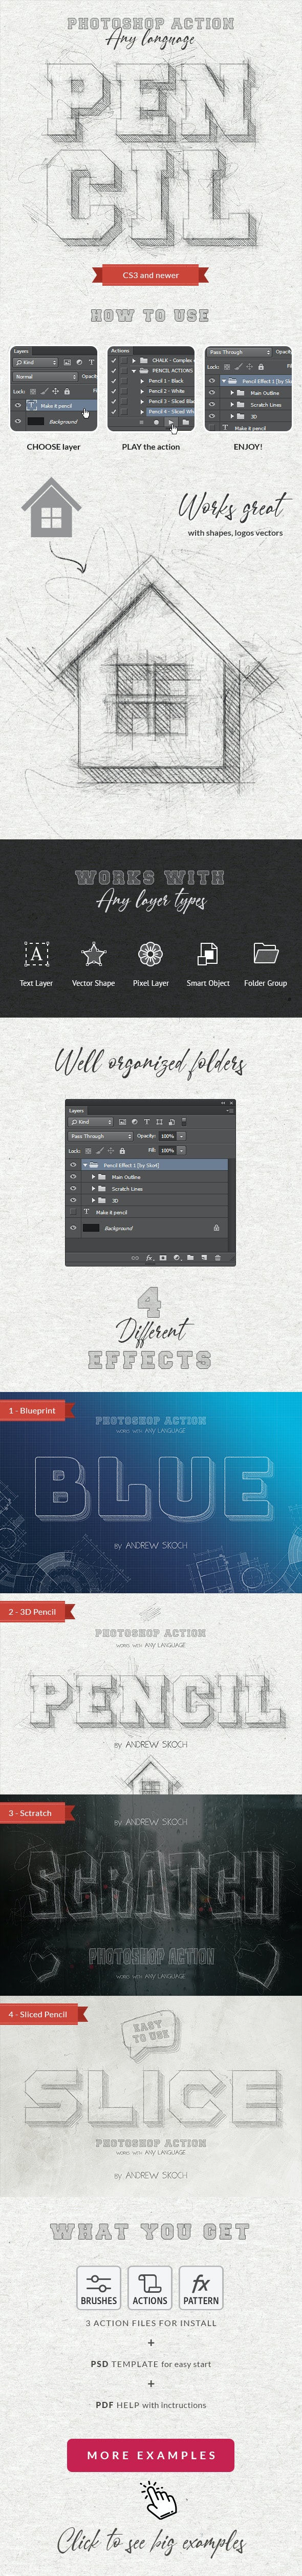 GraphicRiver - Pencil Sketch Photoshop Action Download Free